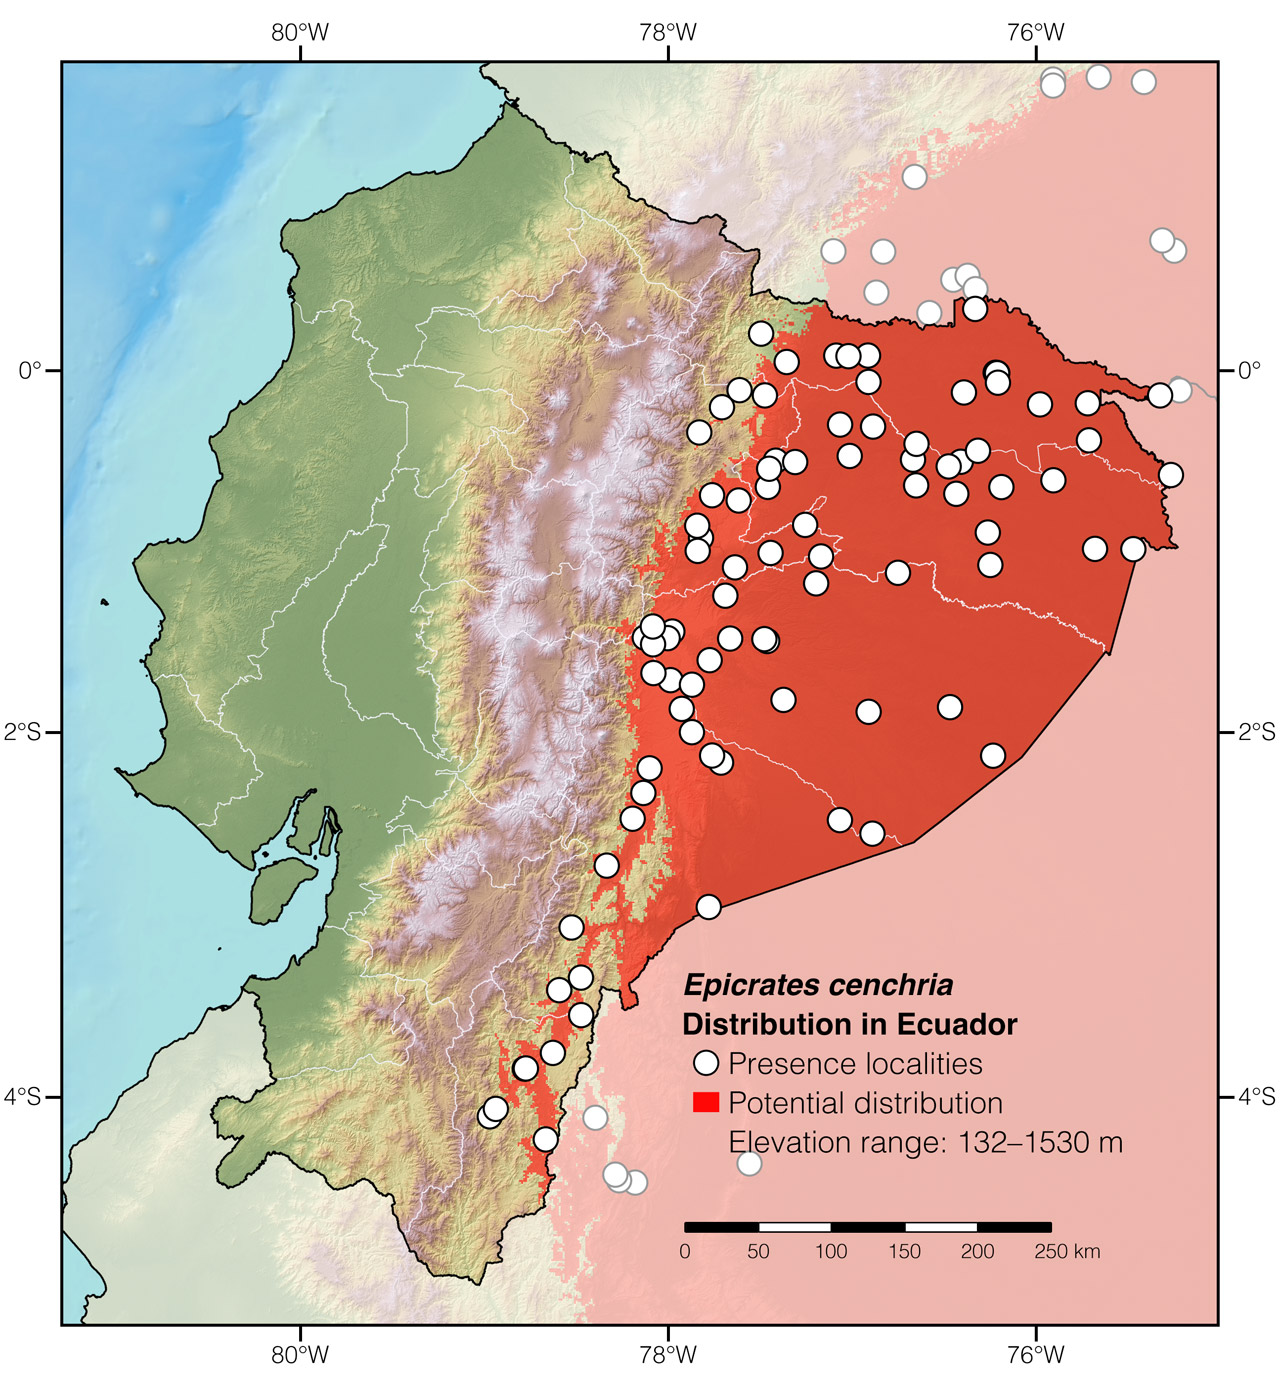 Distribution of Epicrates cenchria in Ecuador